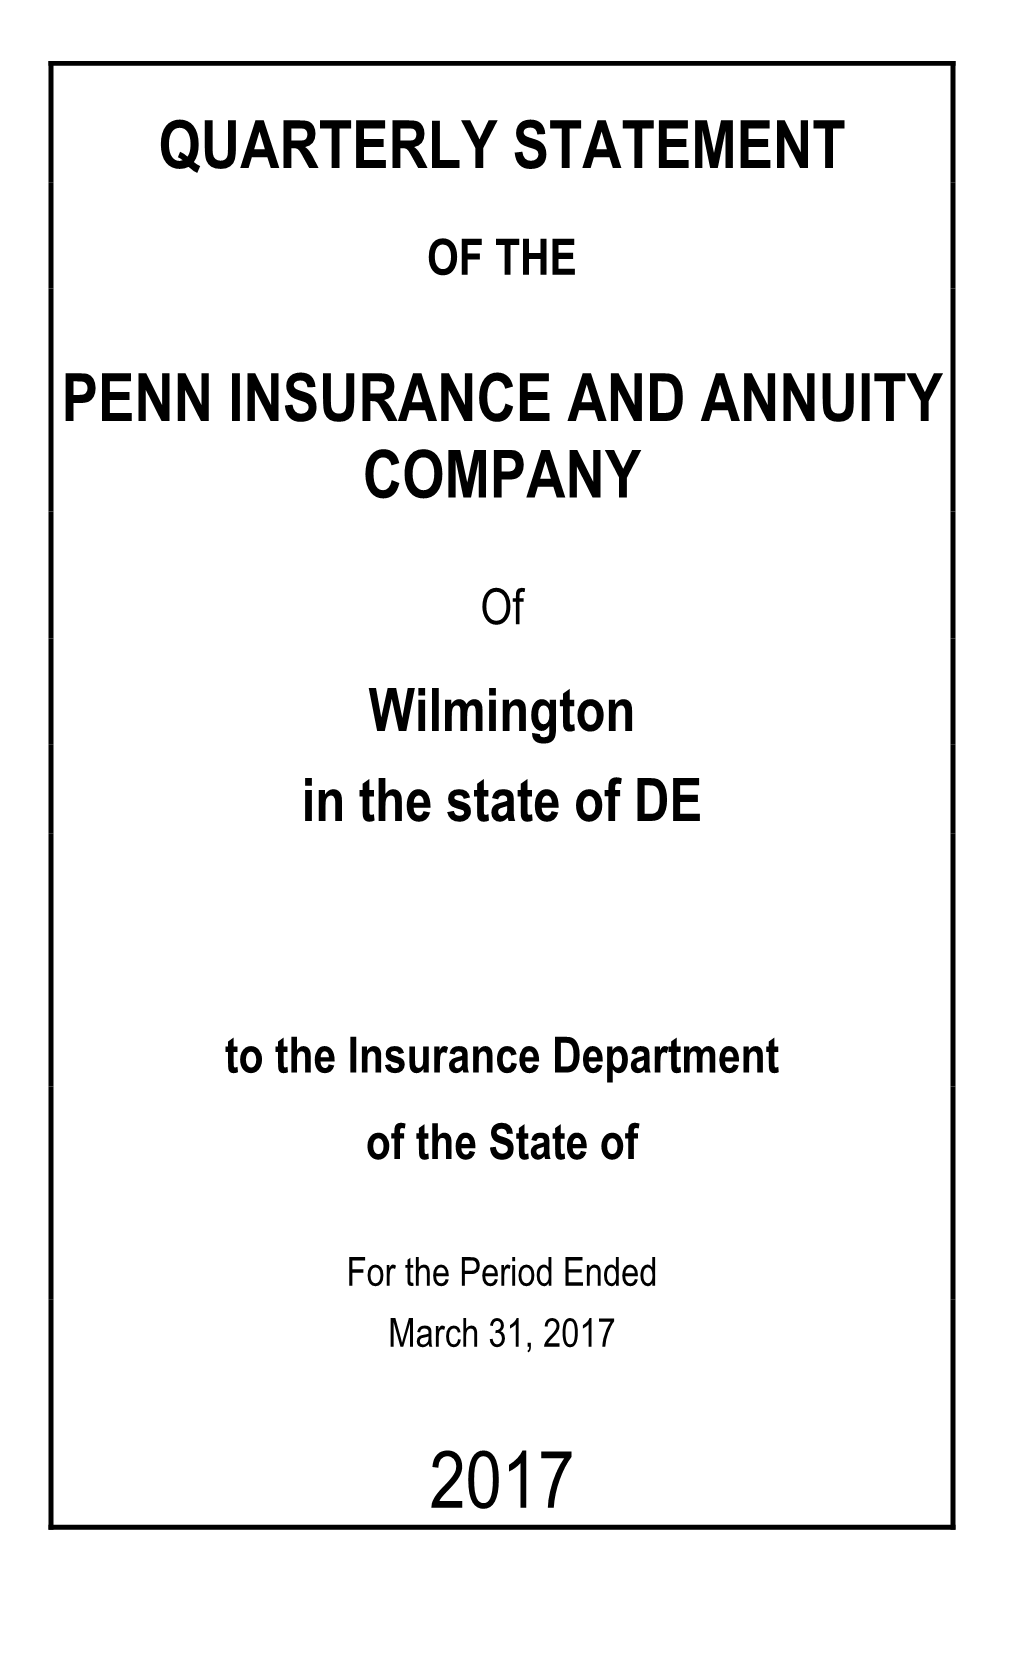 Quarterly Statement Penn Insurance And